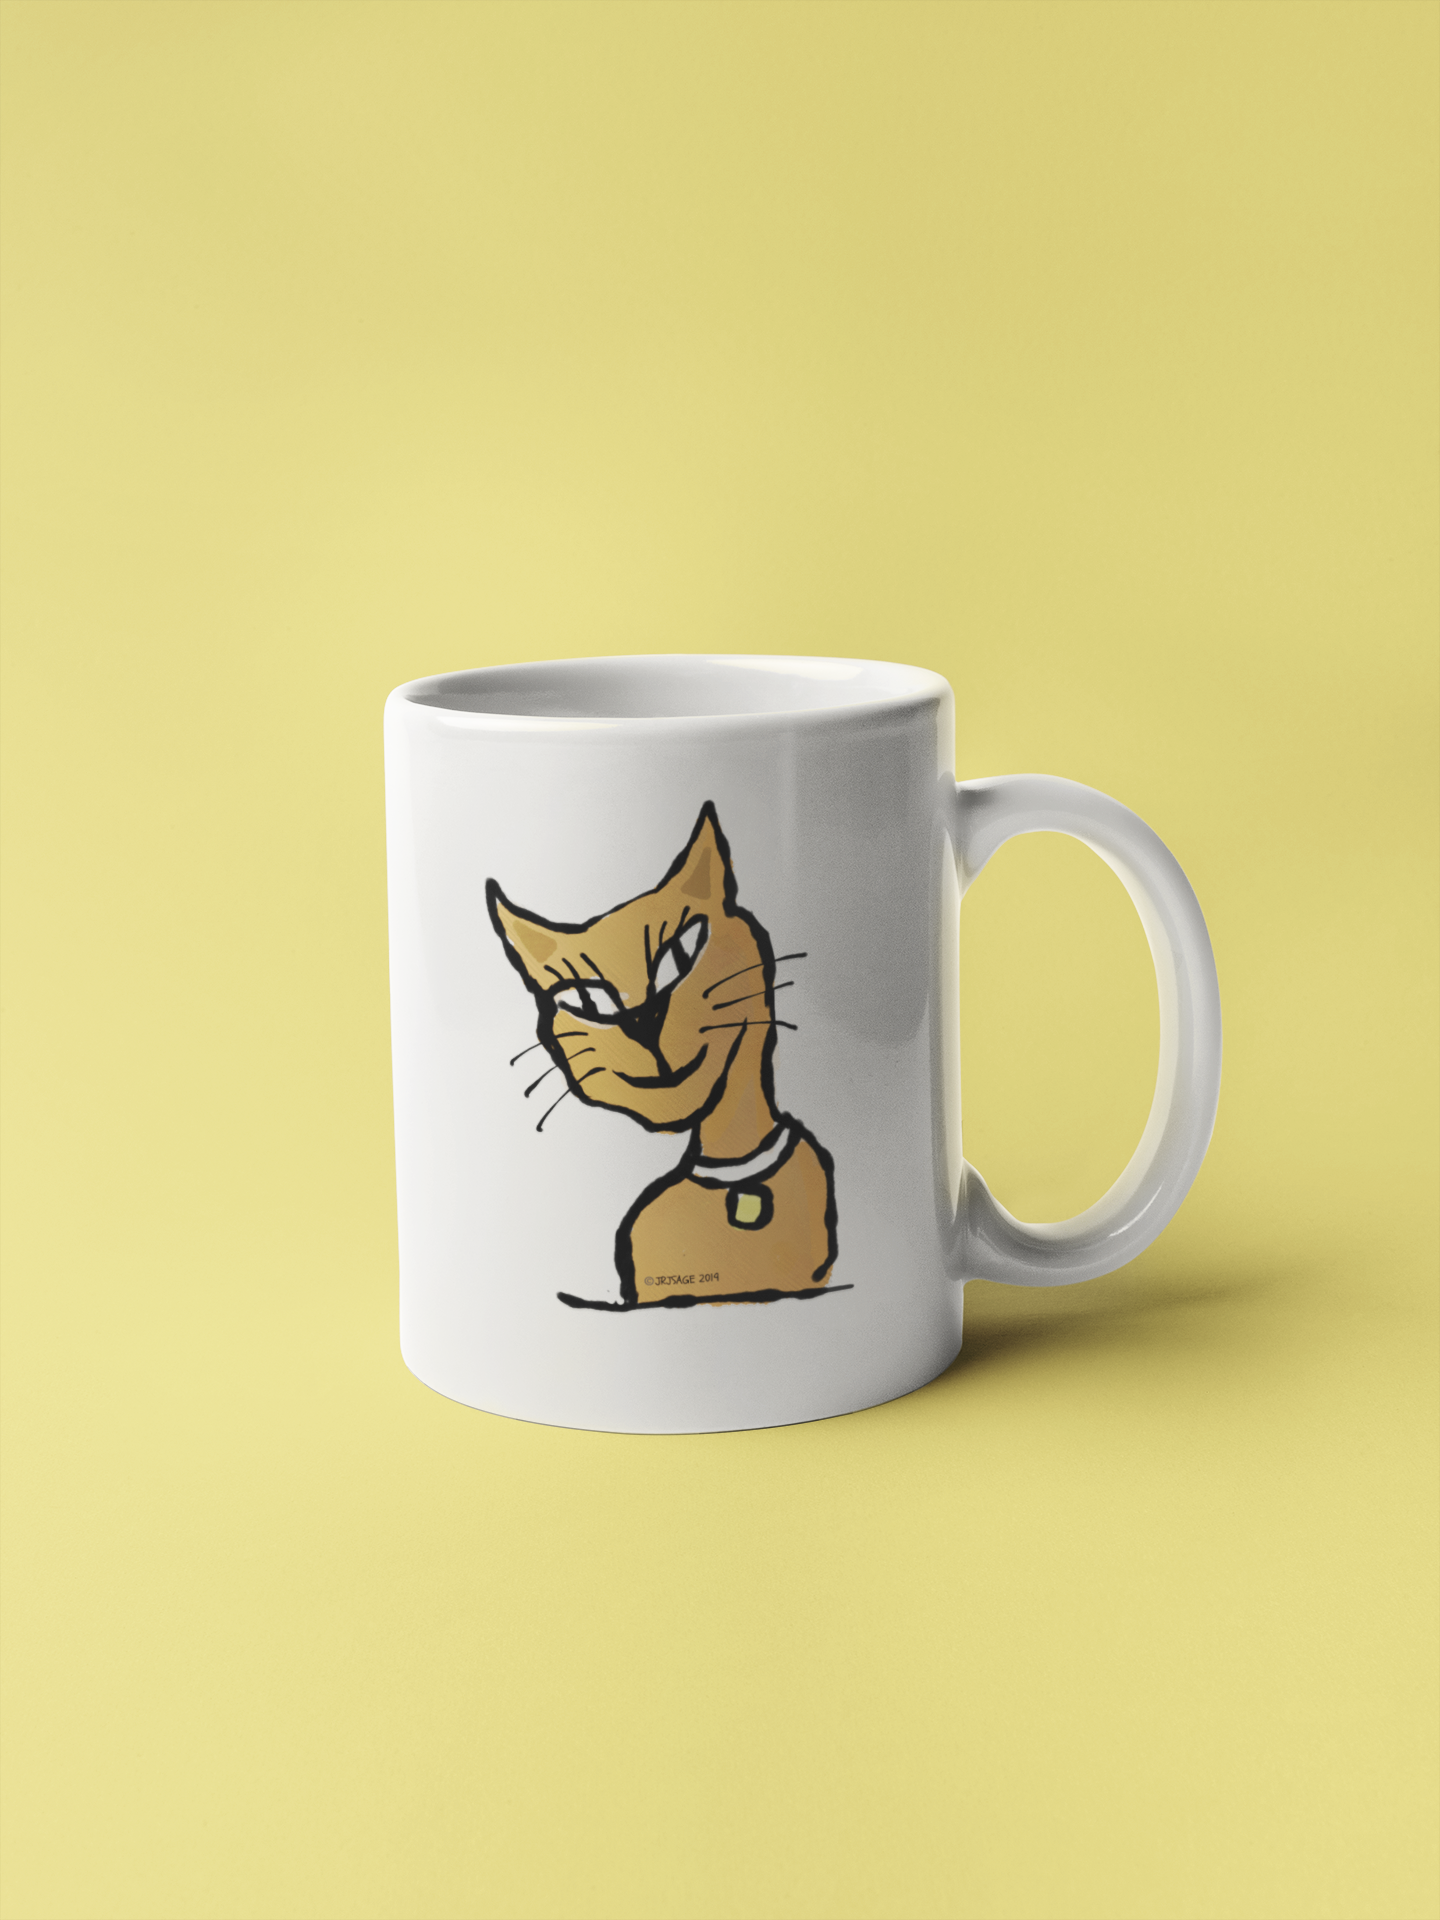 Ginger Cat Mug - A White Ceramic Hector and Bone Mug with a cute Smiling Ginger Cat illustration